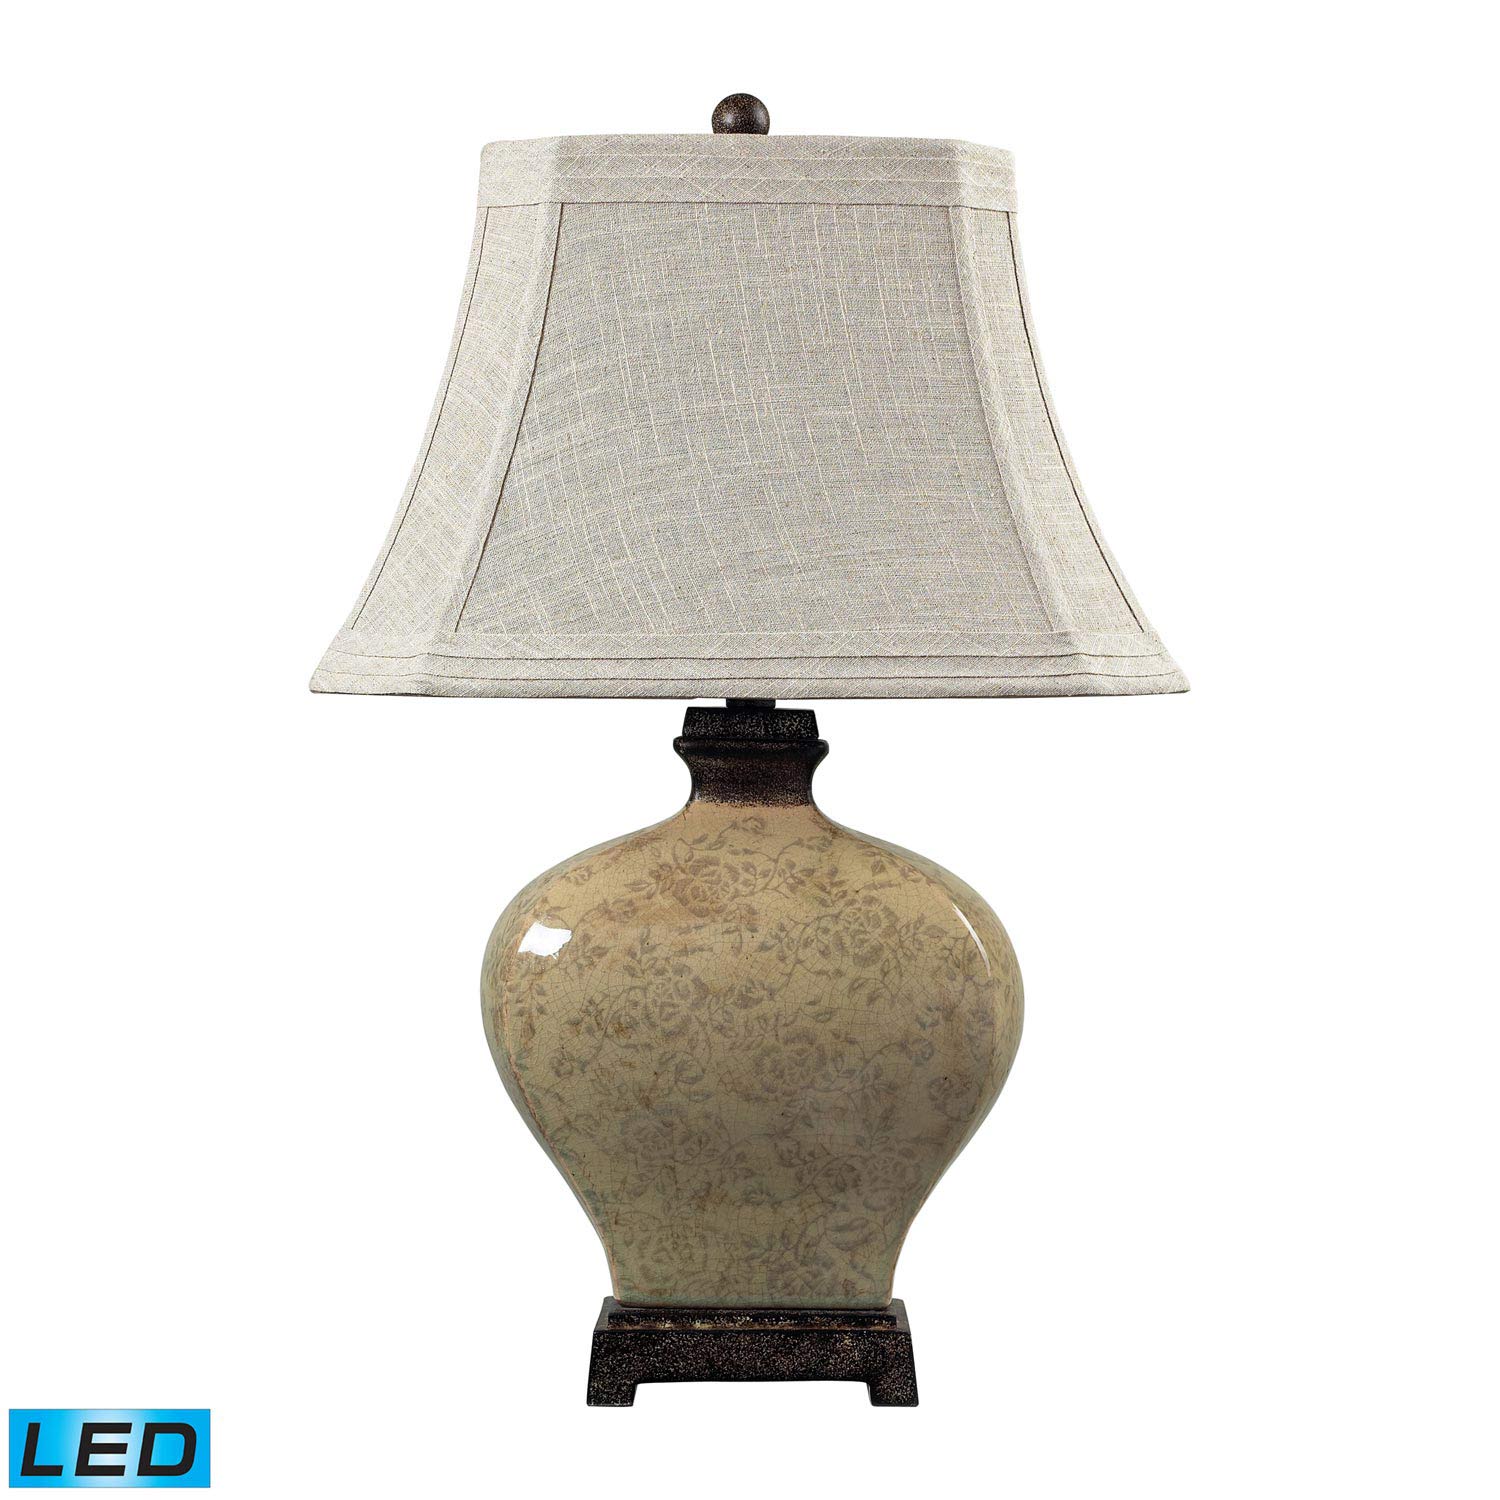 Elk Lighting 113-1132-LED Normandie Table Lamp - Sky Valley with Bronze